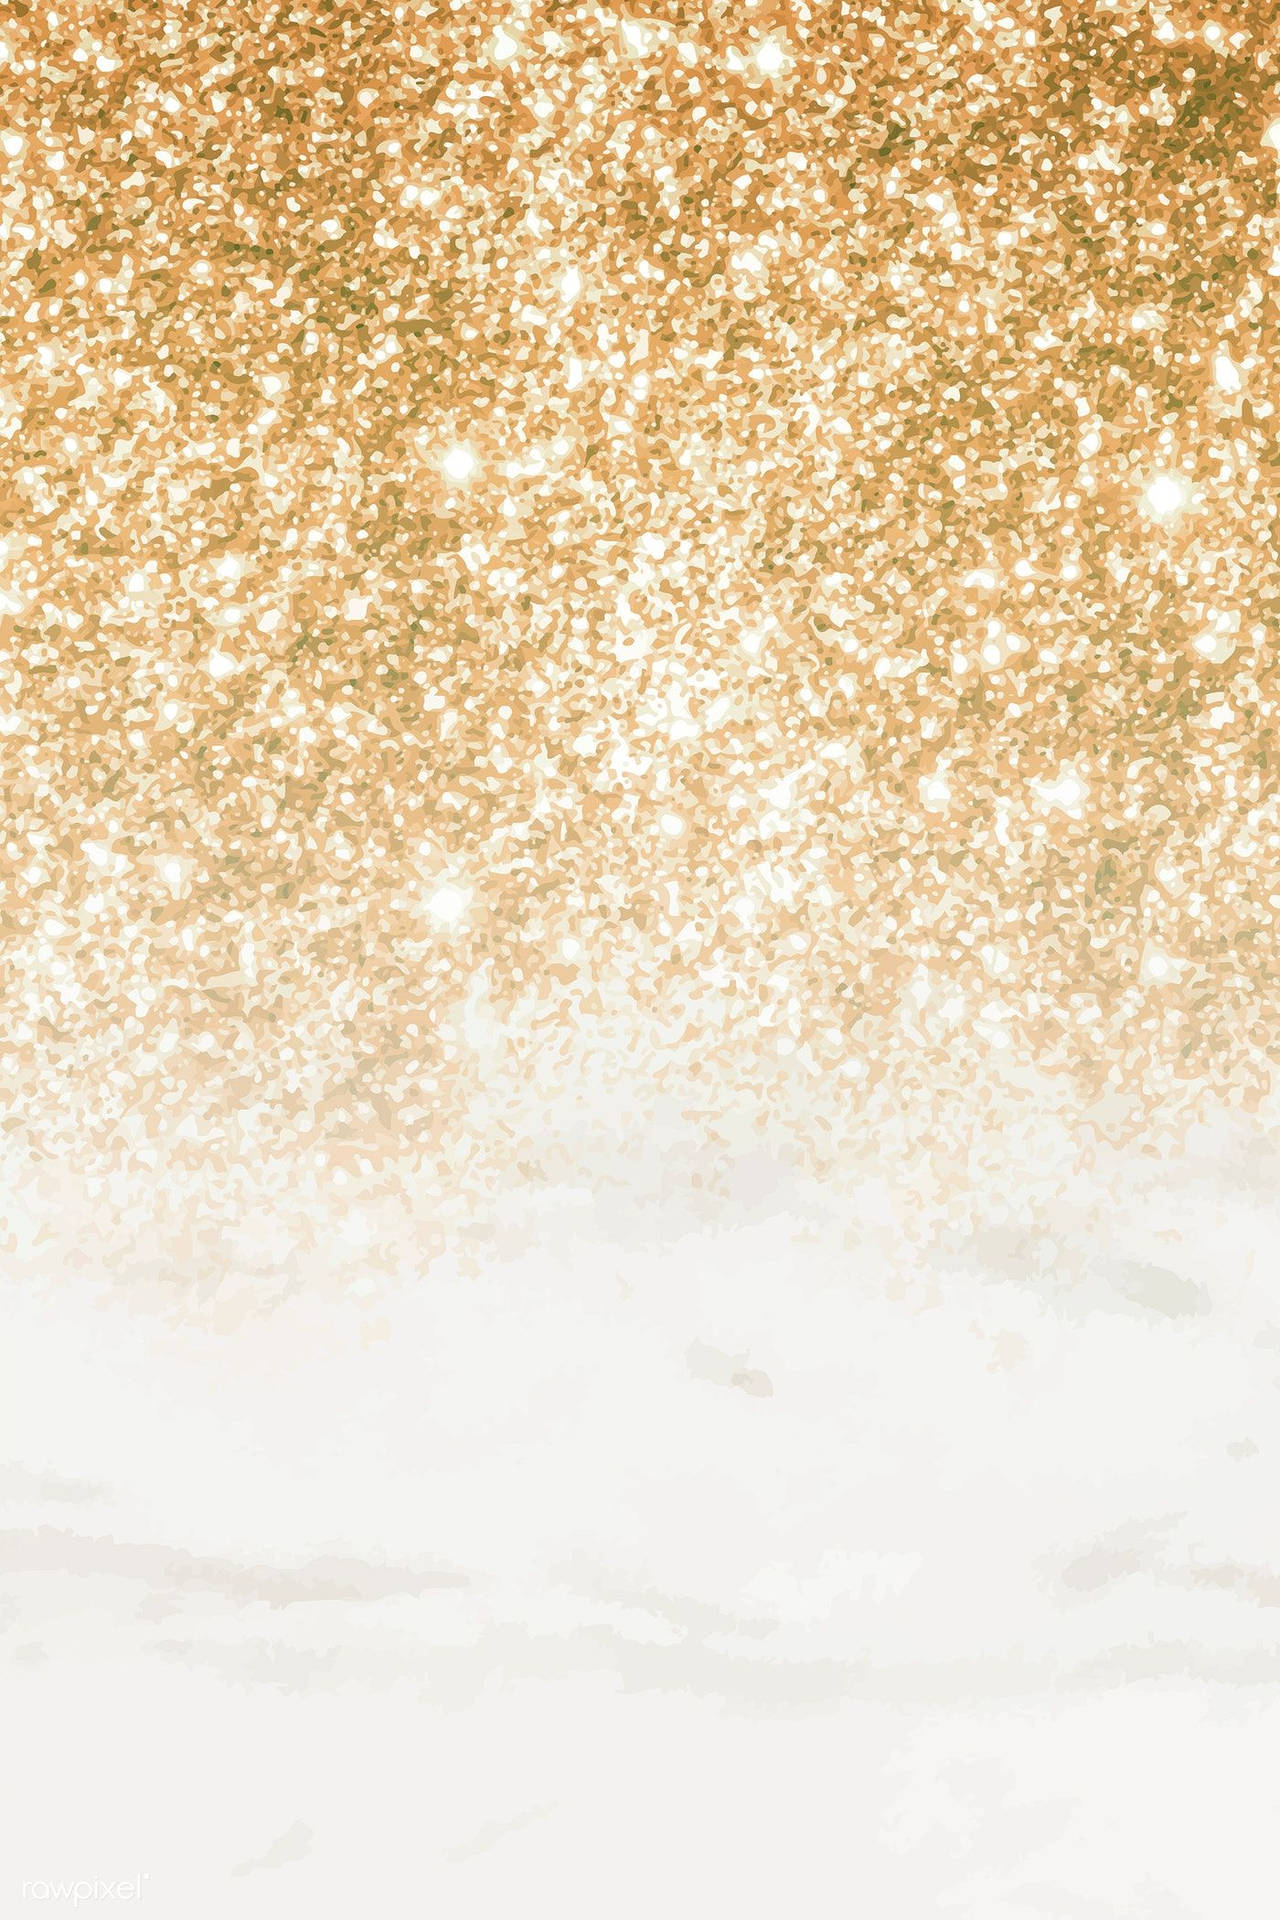 White And Gold Glitter Shower Wallpaper